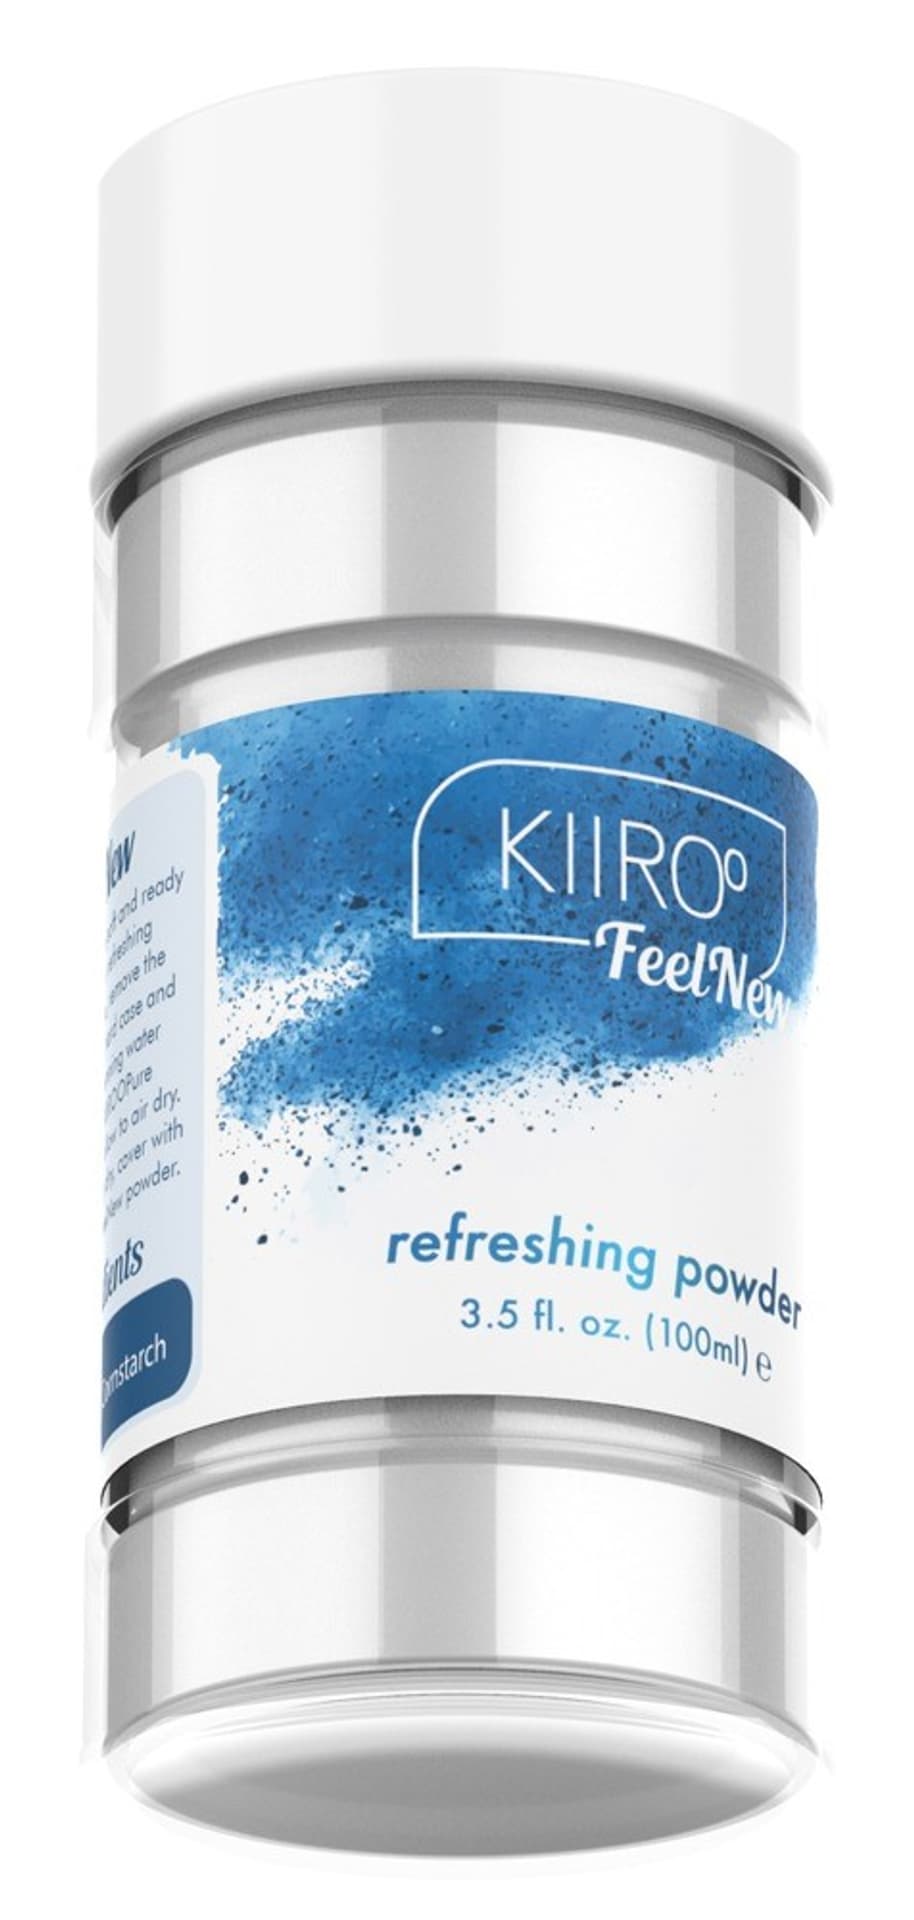 

Puder do konserwacji - Kiiroo Feel New Refreshing Powder 100 ml